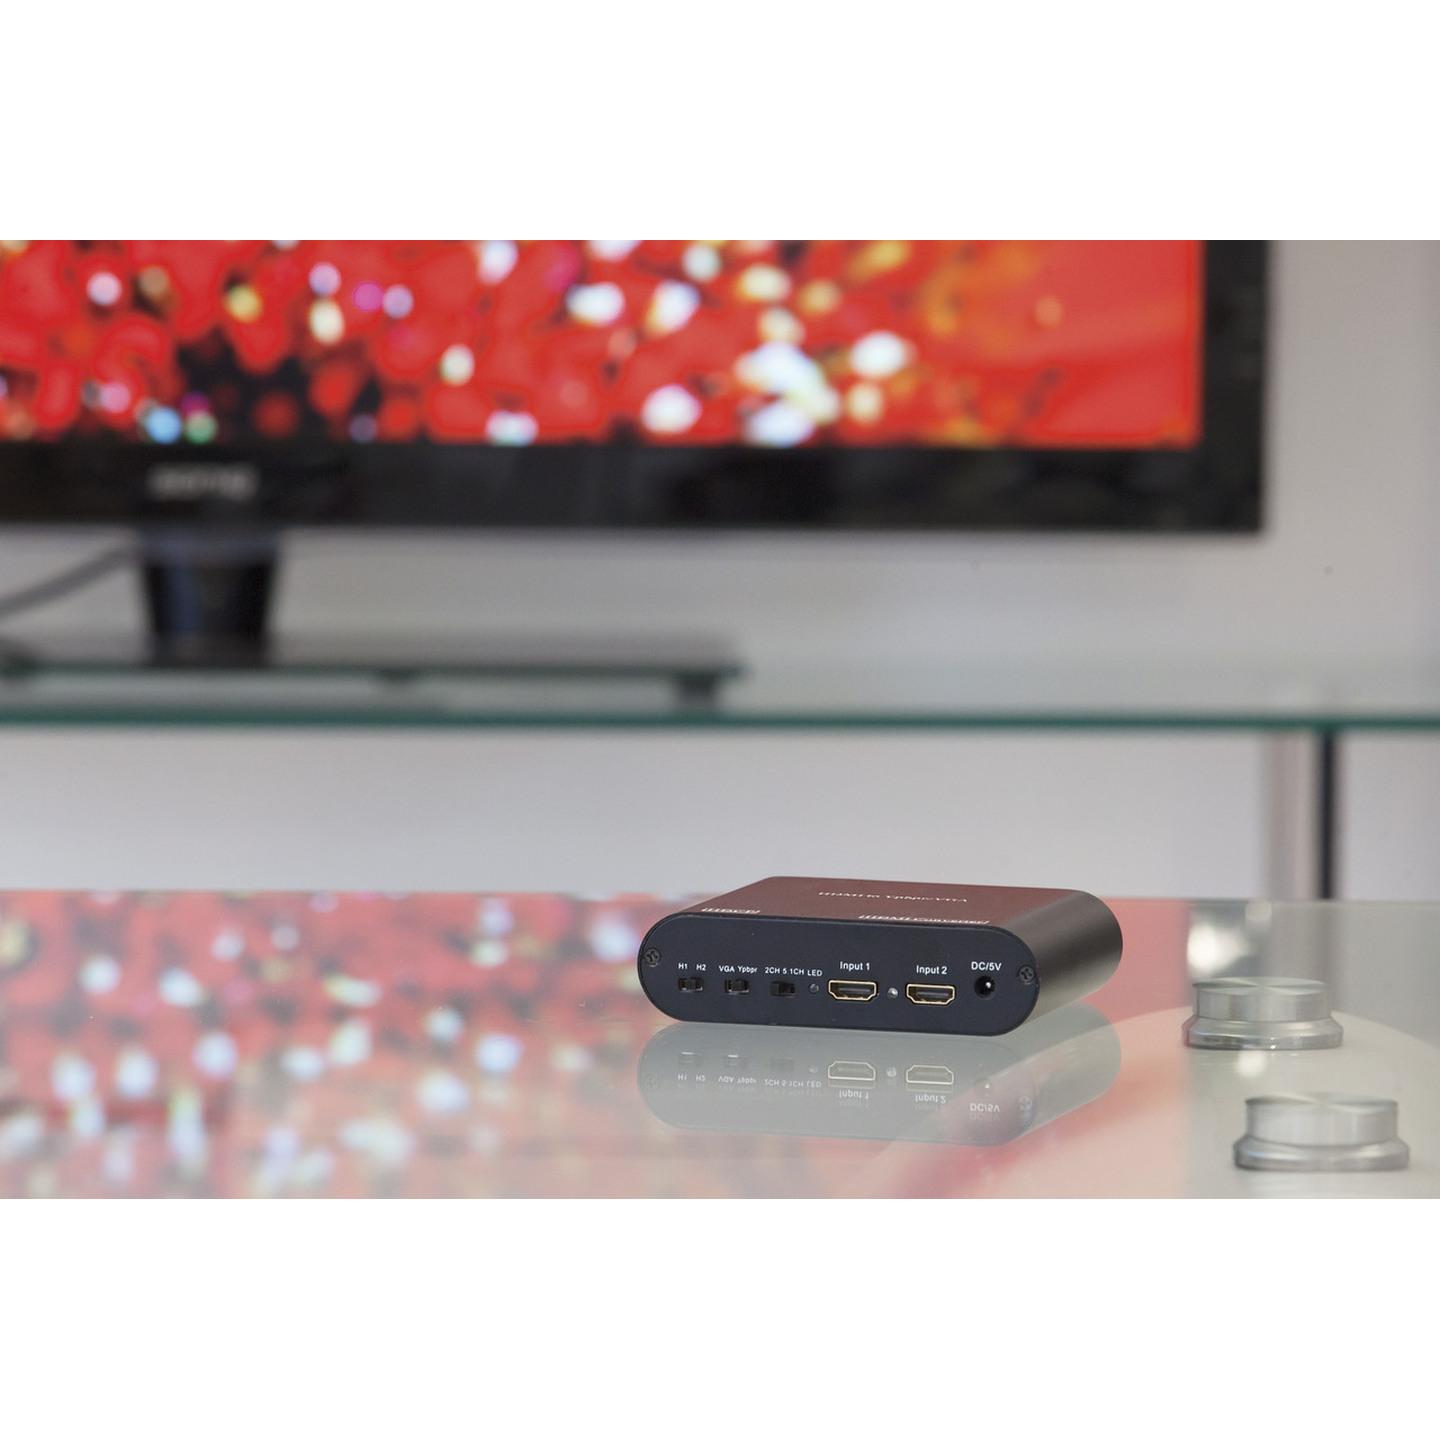  2 x HDMI to VGA/Component & Analogue/Digital Audio Converter